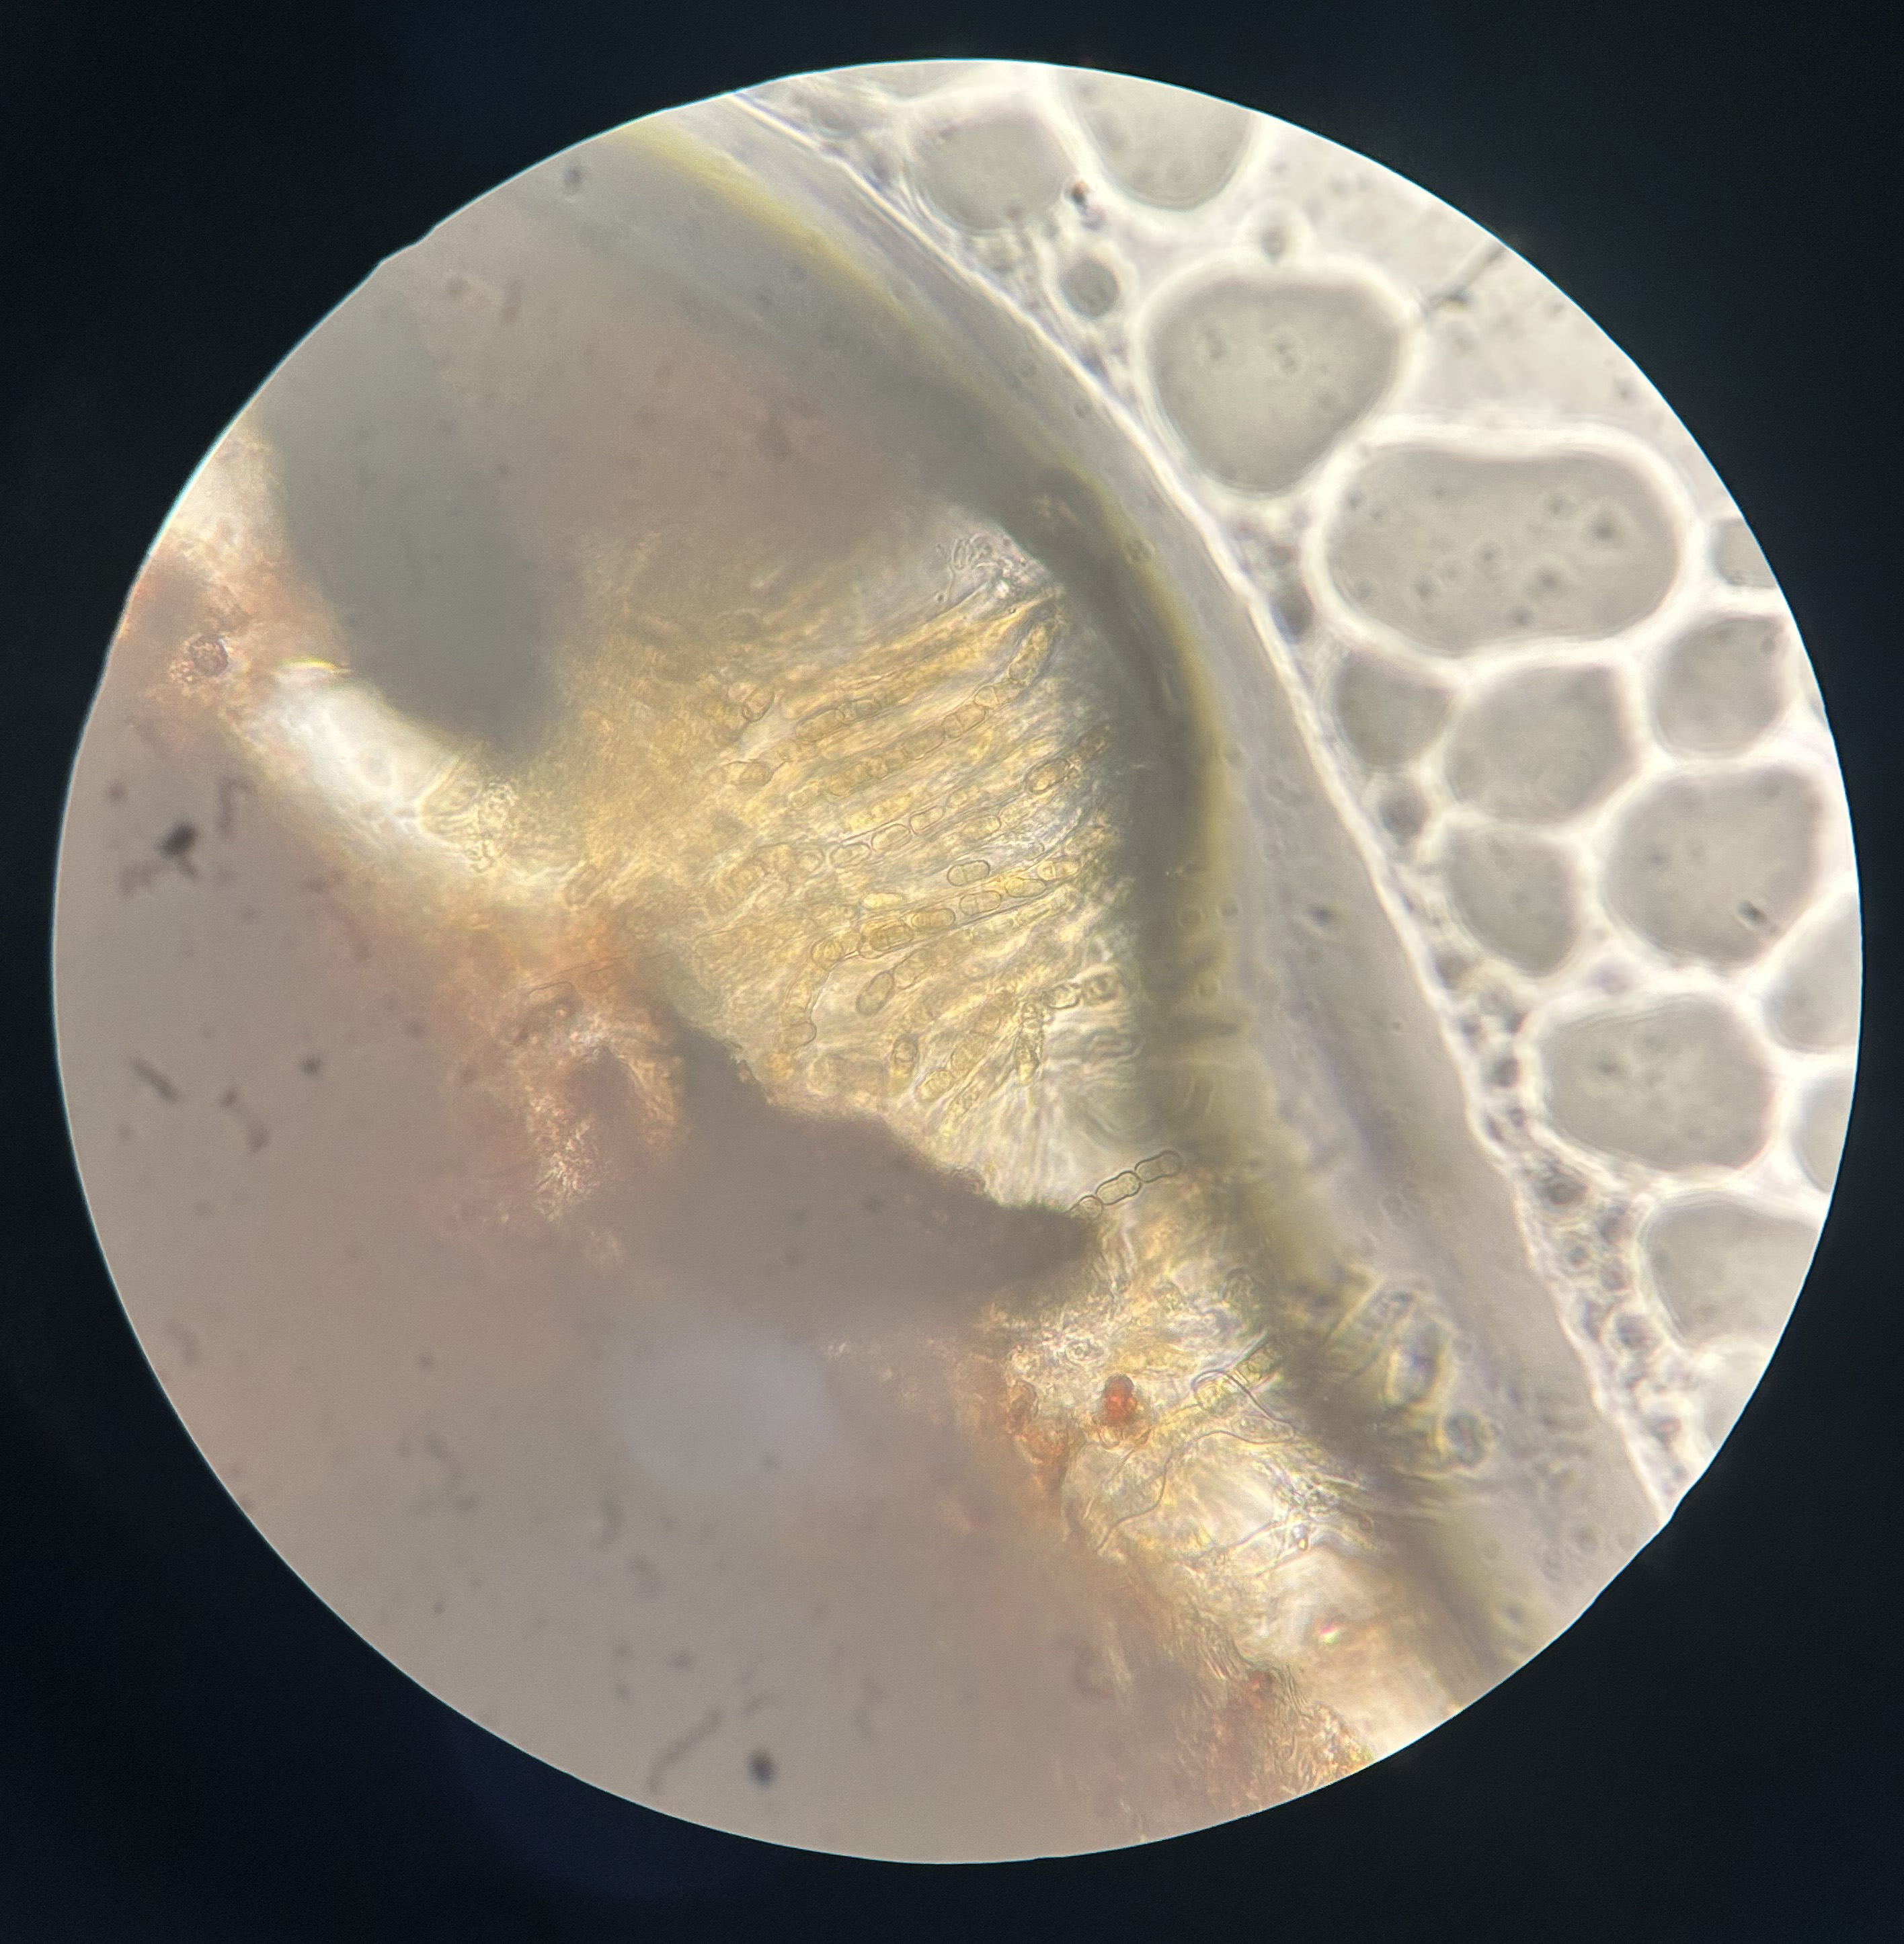 Apple scab ascospores under a miscroscope.